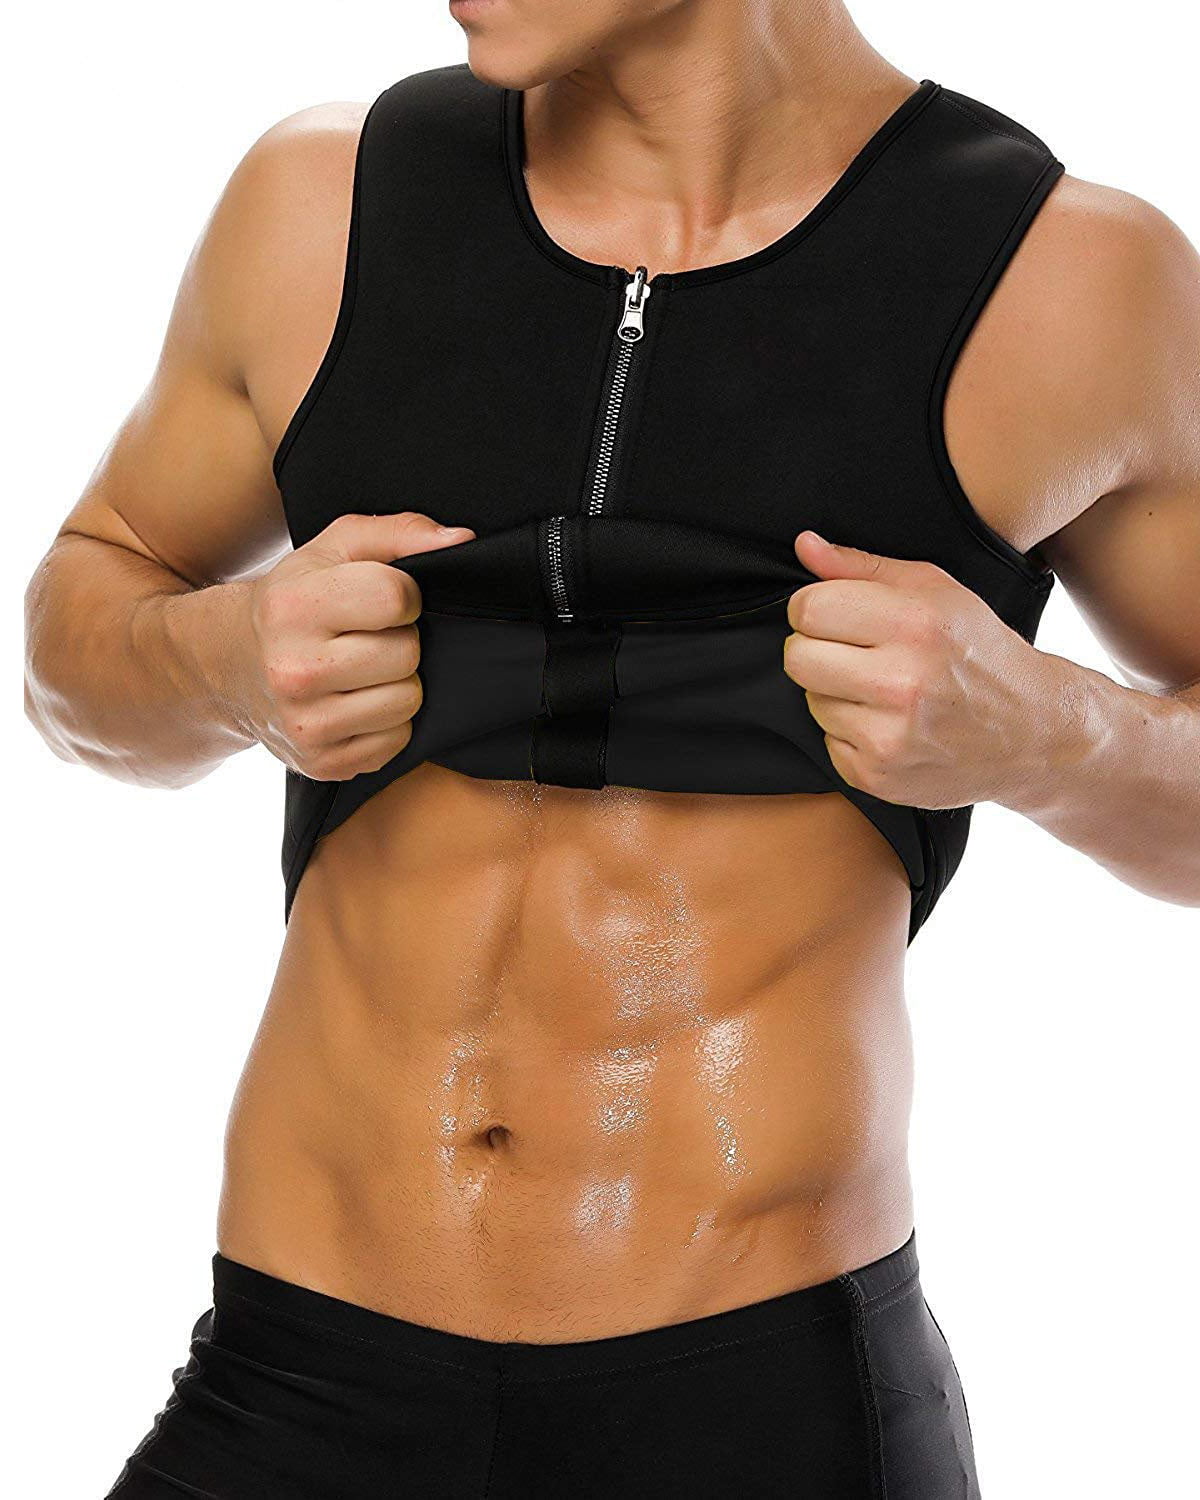 Waist Trainer Abdomen Sauna Suit Fat Burner Women Body Shaper Sweat Weight Loss